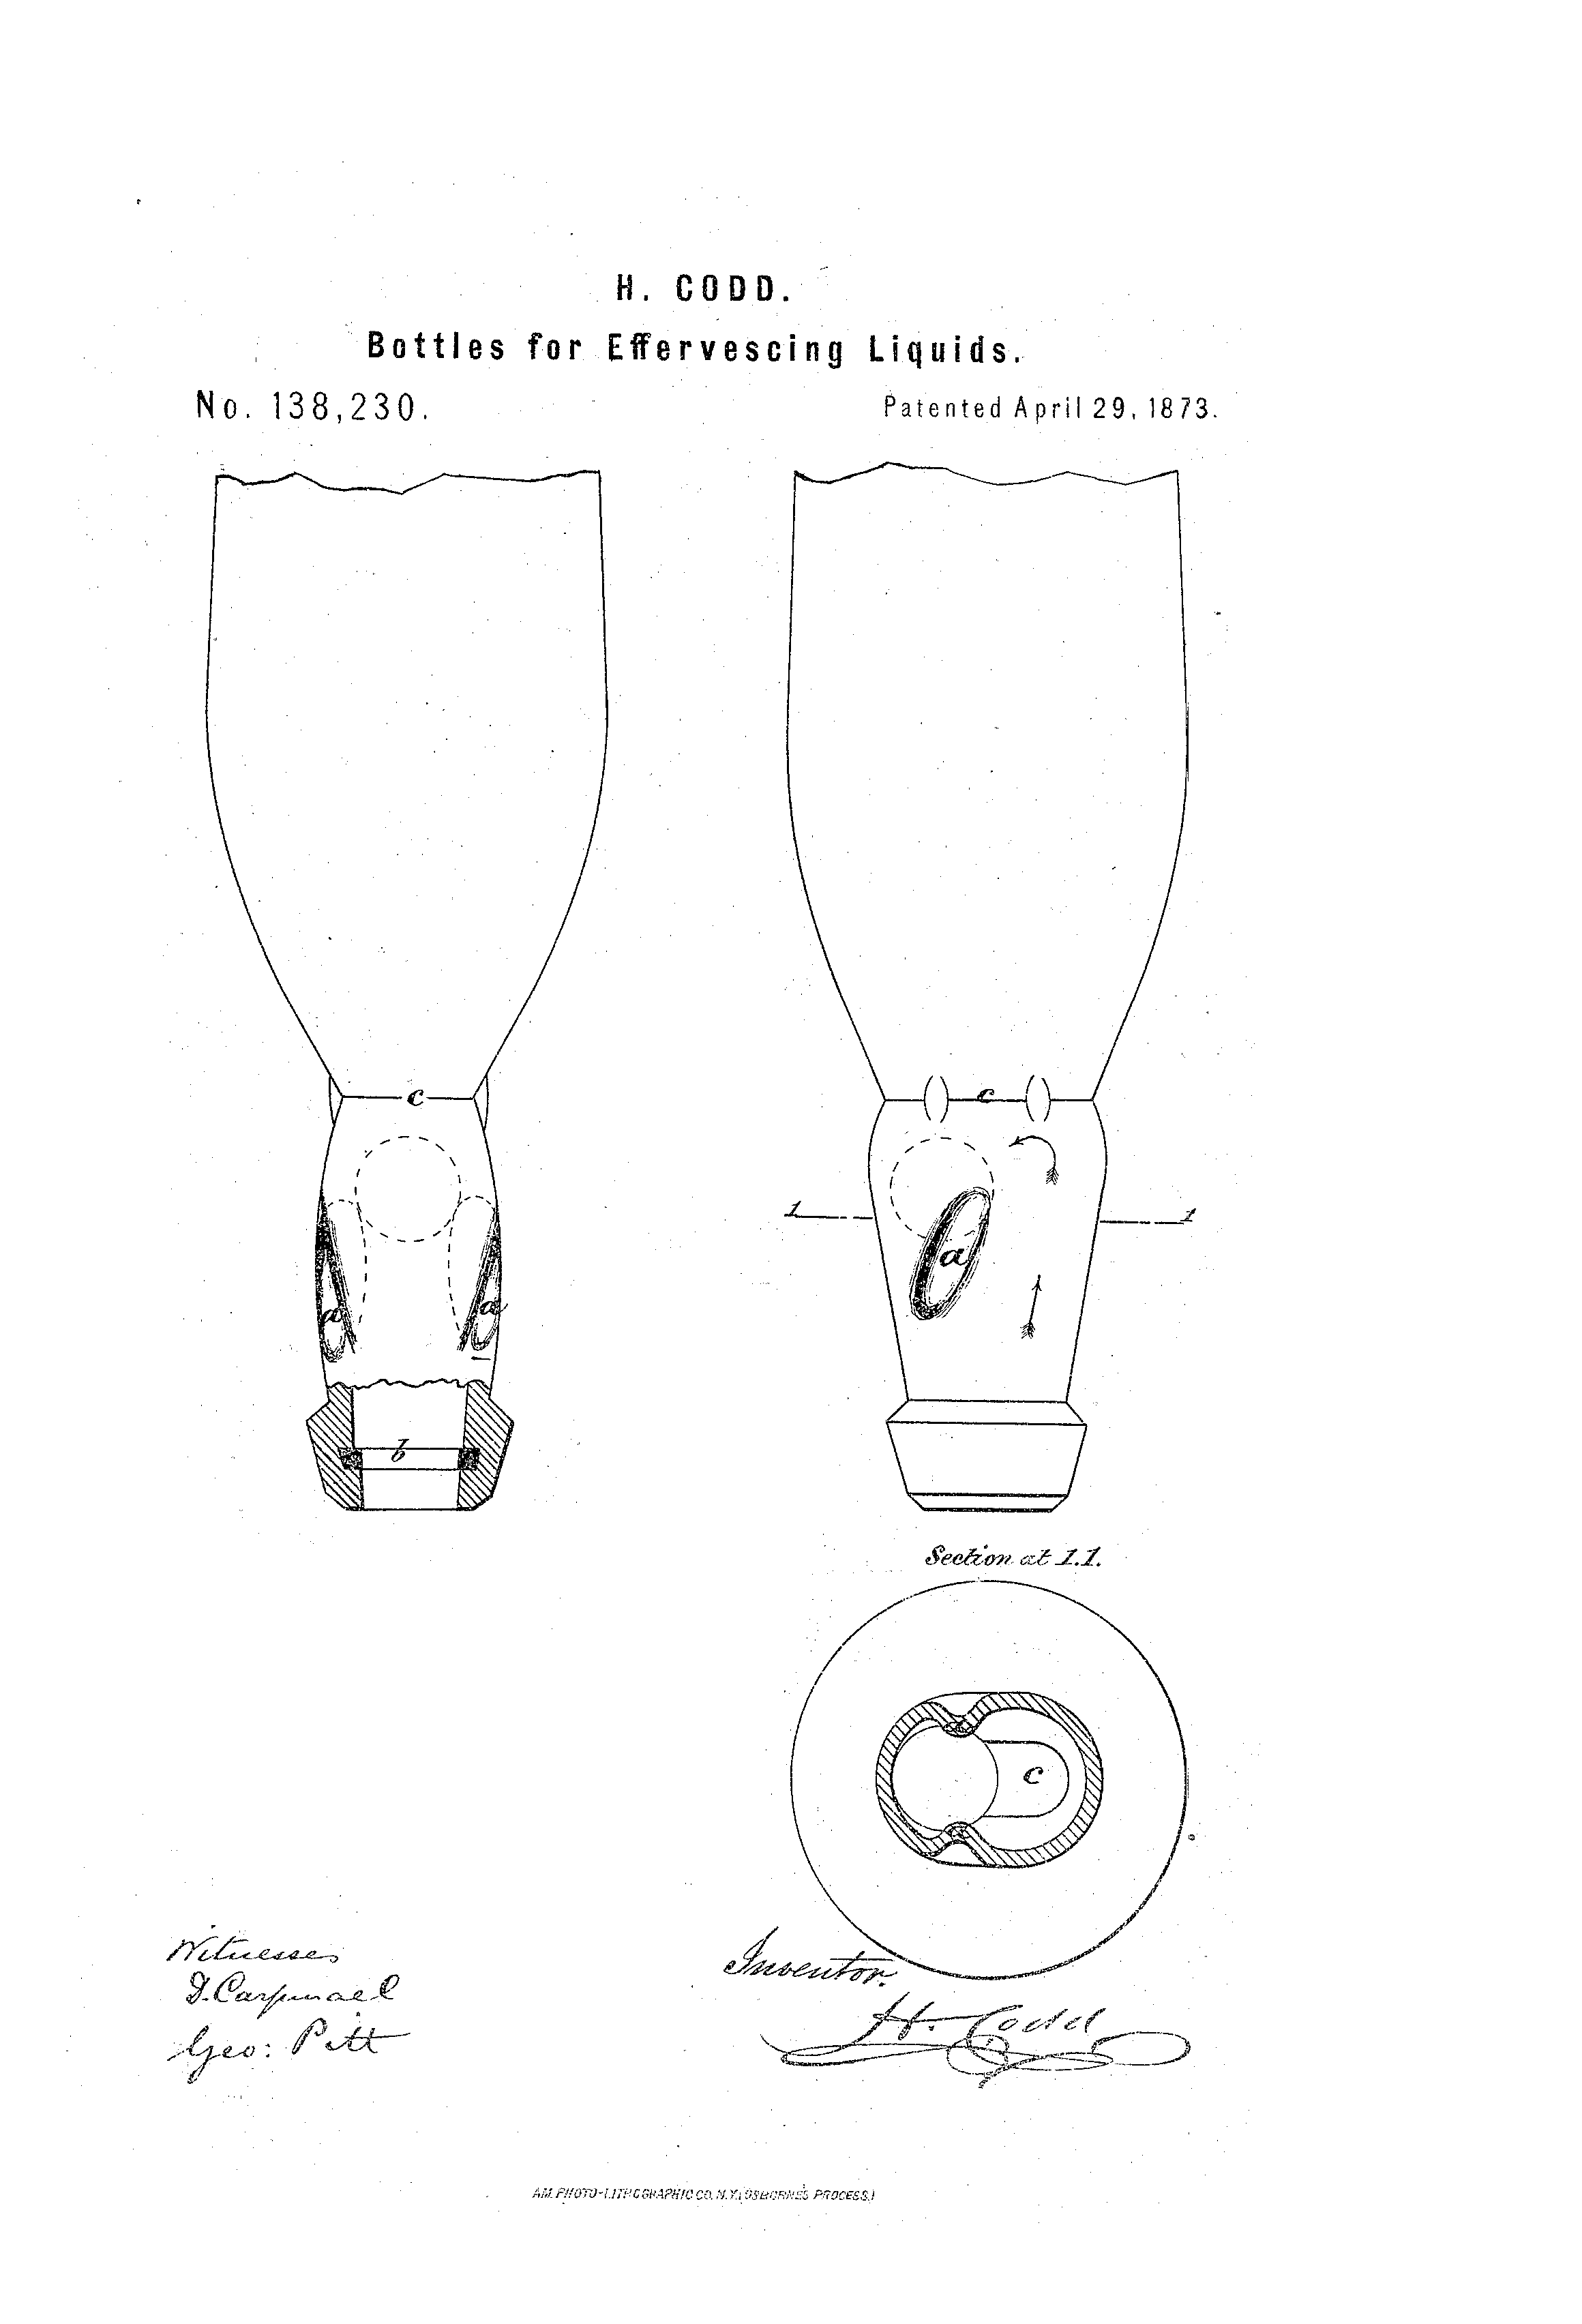 Patent 138,230